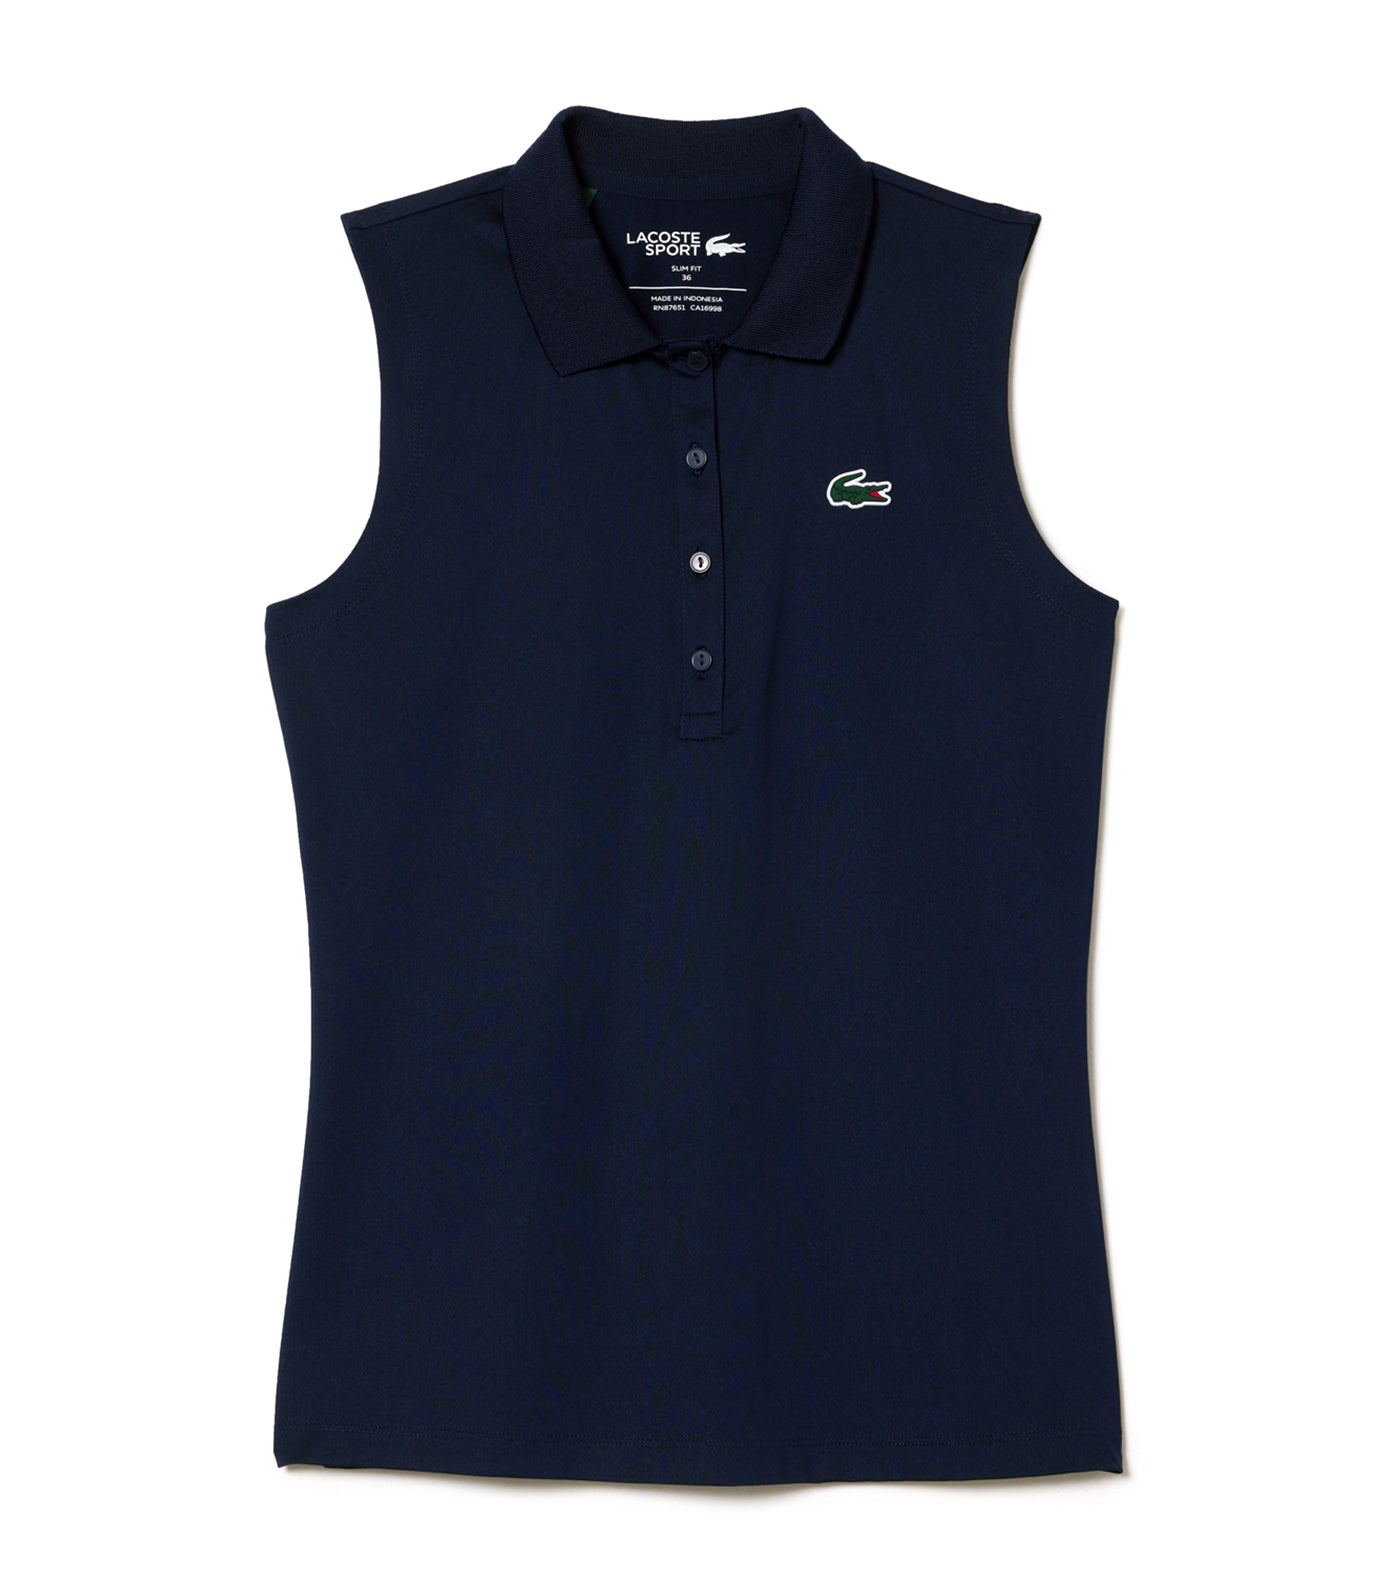 Ultra-Dry Slim Fit Anti-UV Stretch Golf Polo Shirt Navy Blue